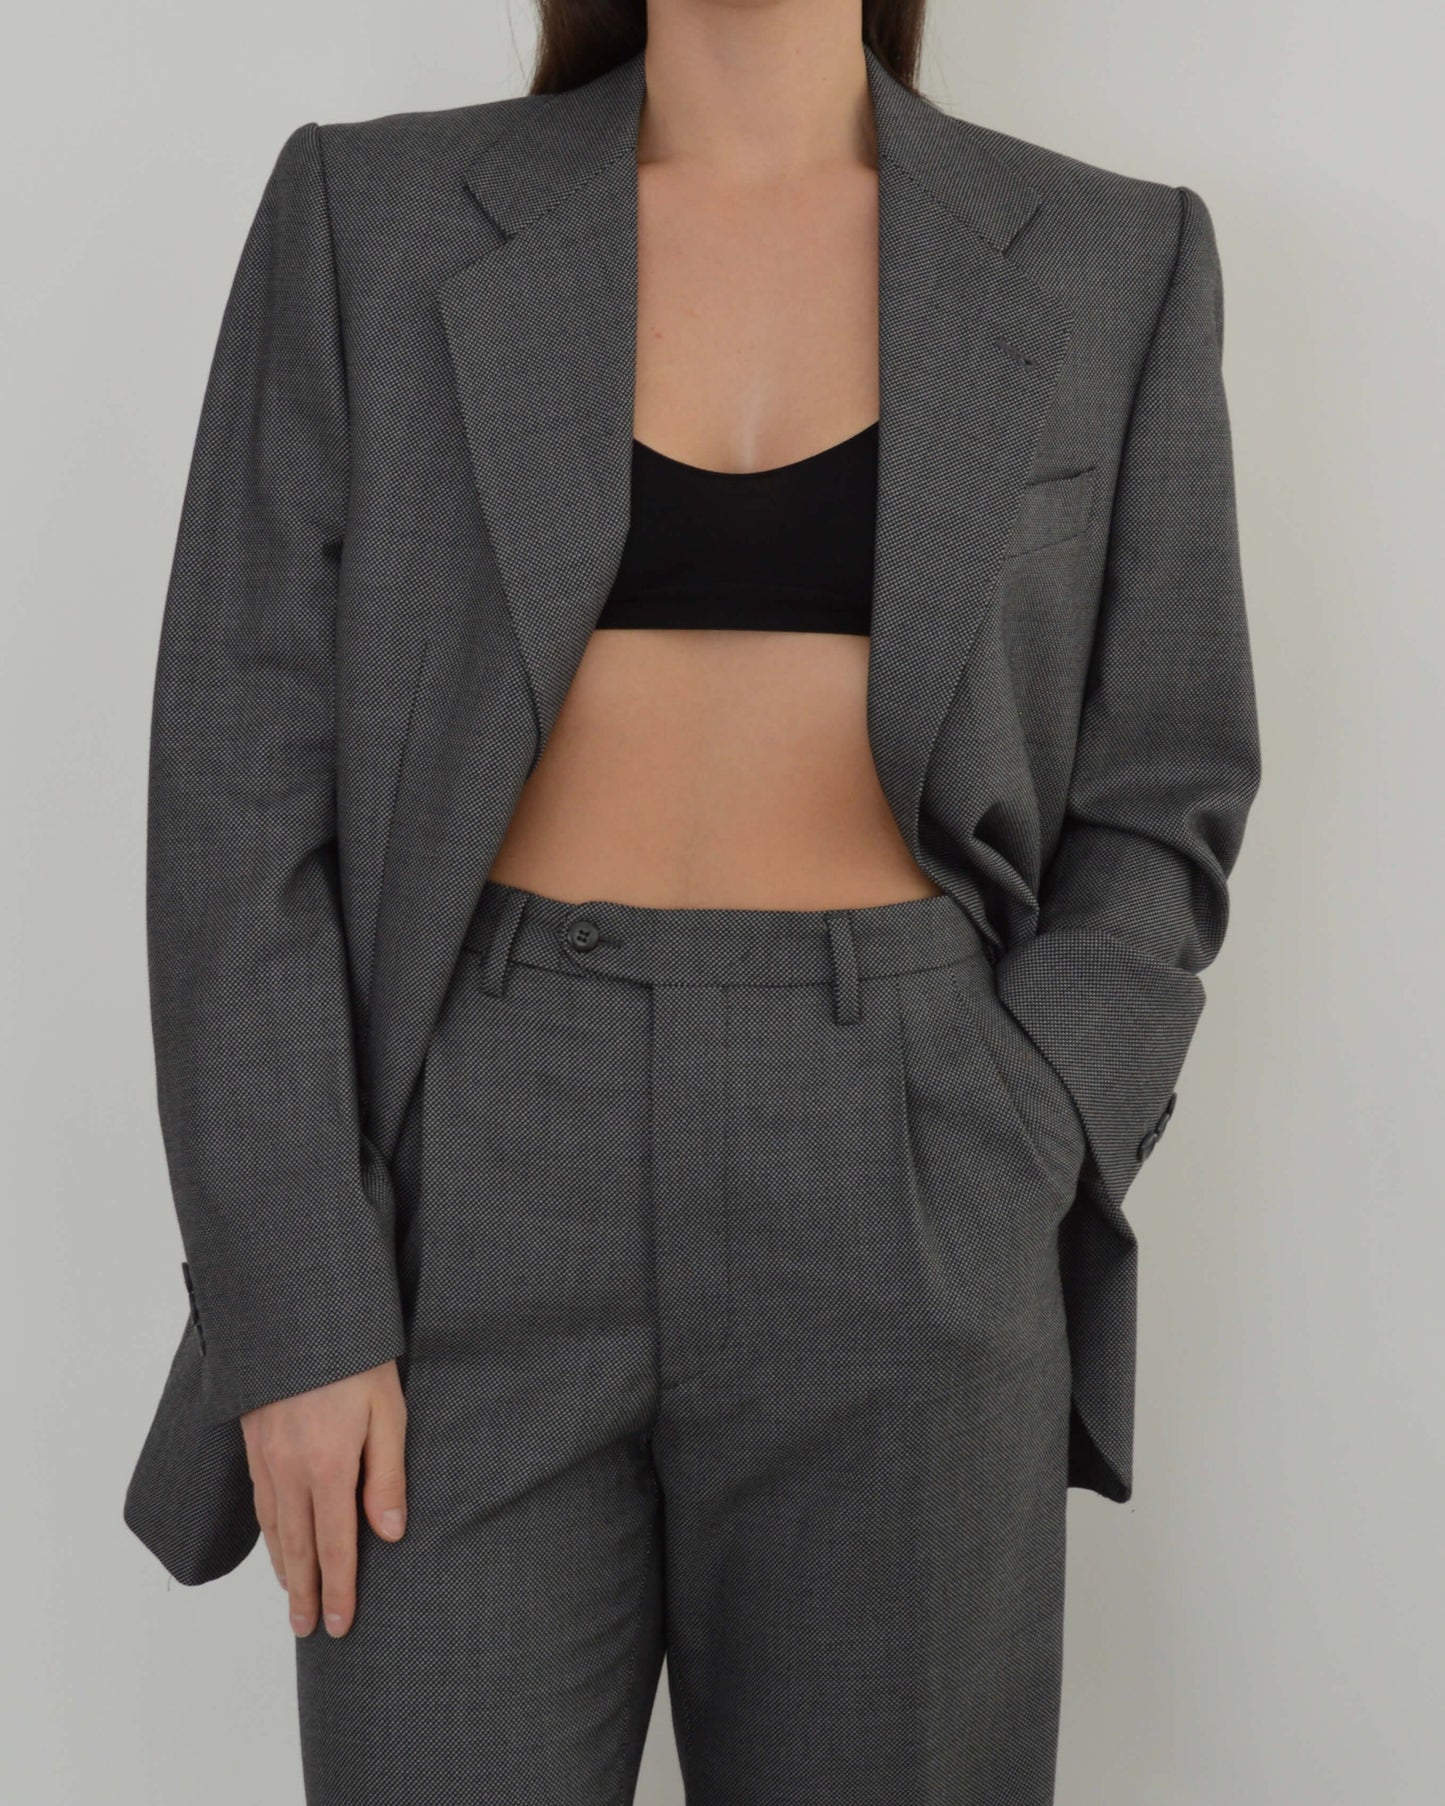 Suit - Textured Gray (S/M)